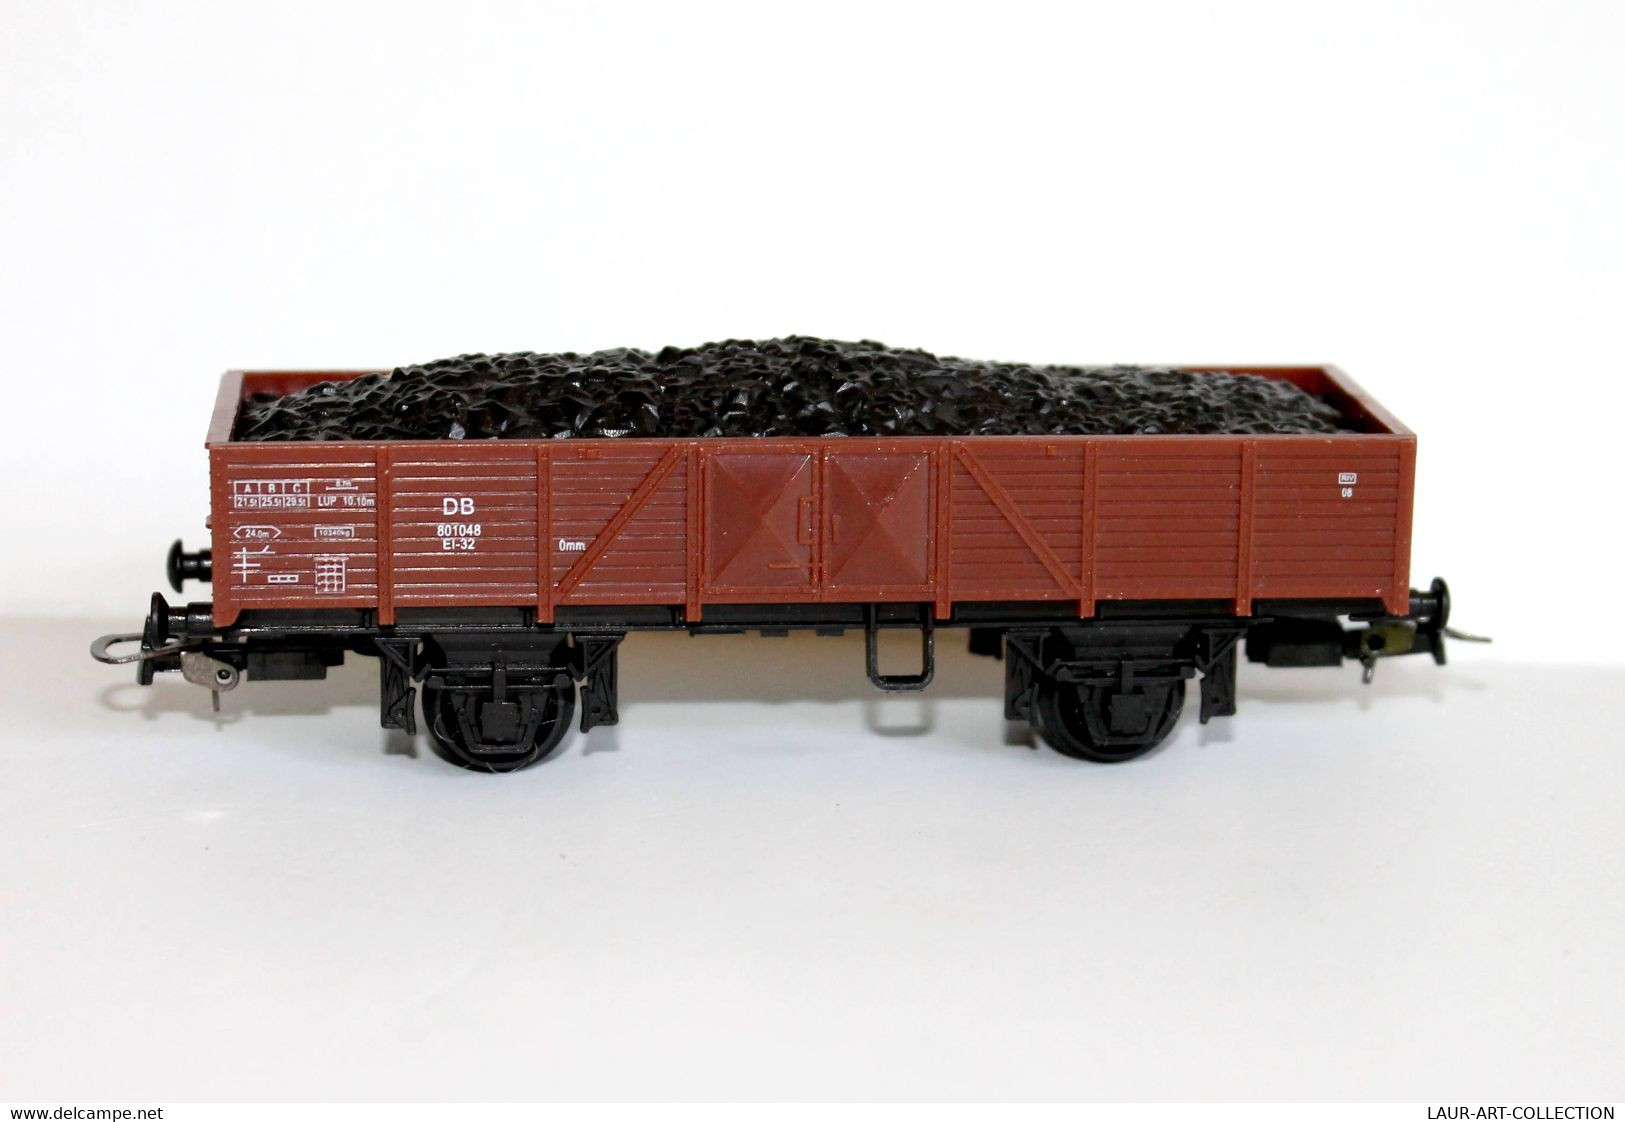 WAGON TOMBEREAU AVEC DECOR MARCHANDISES - HO - DB 801048 EI-32 - MINIATURE FERROVIAIRE TRAIN (2105.113) - Goods Waggons (wagons)